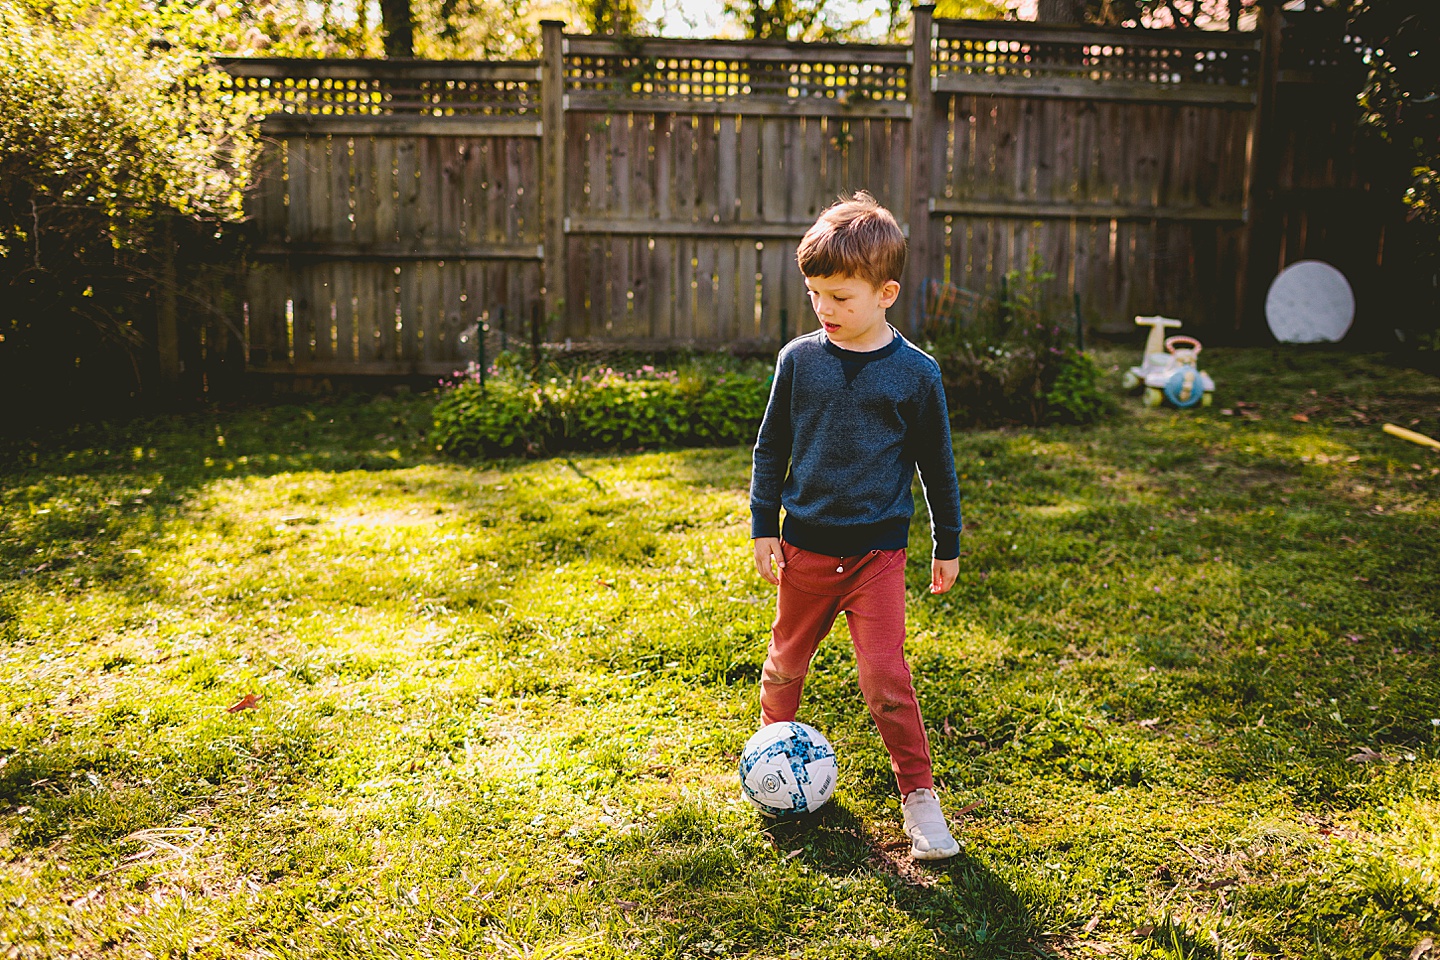 Boy playing soccer in the backyard